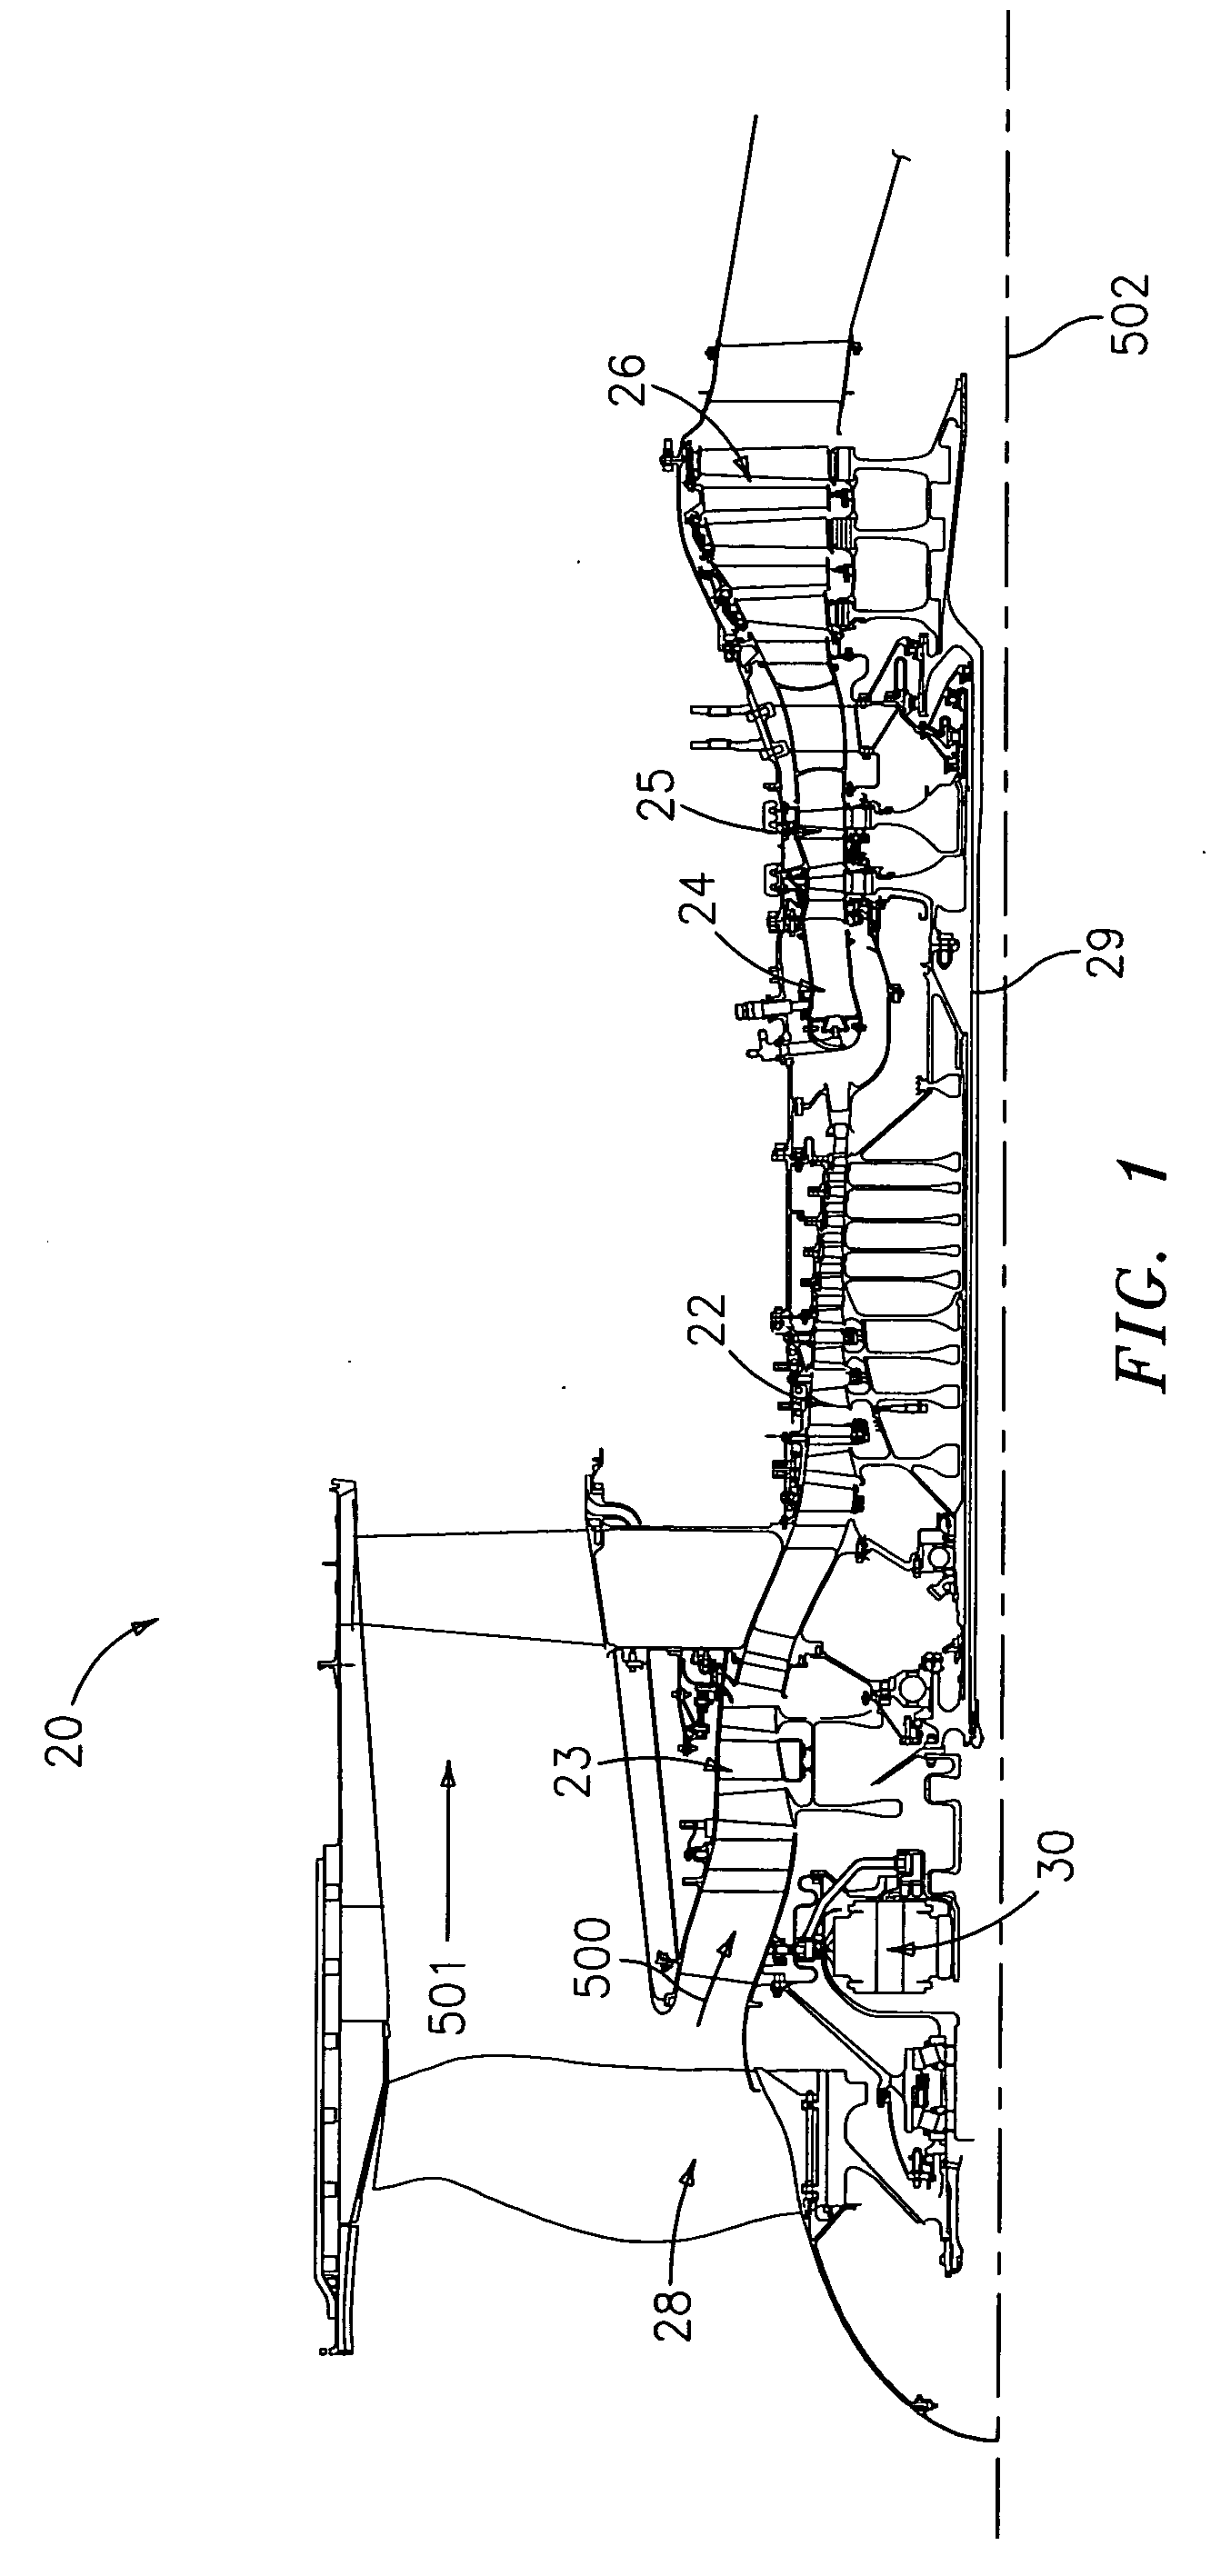 Turbine engine rotor stack